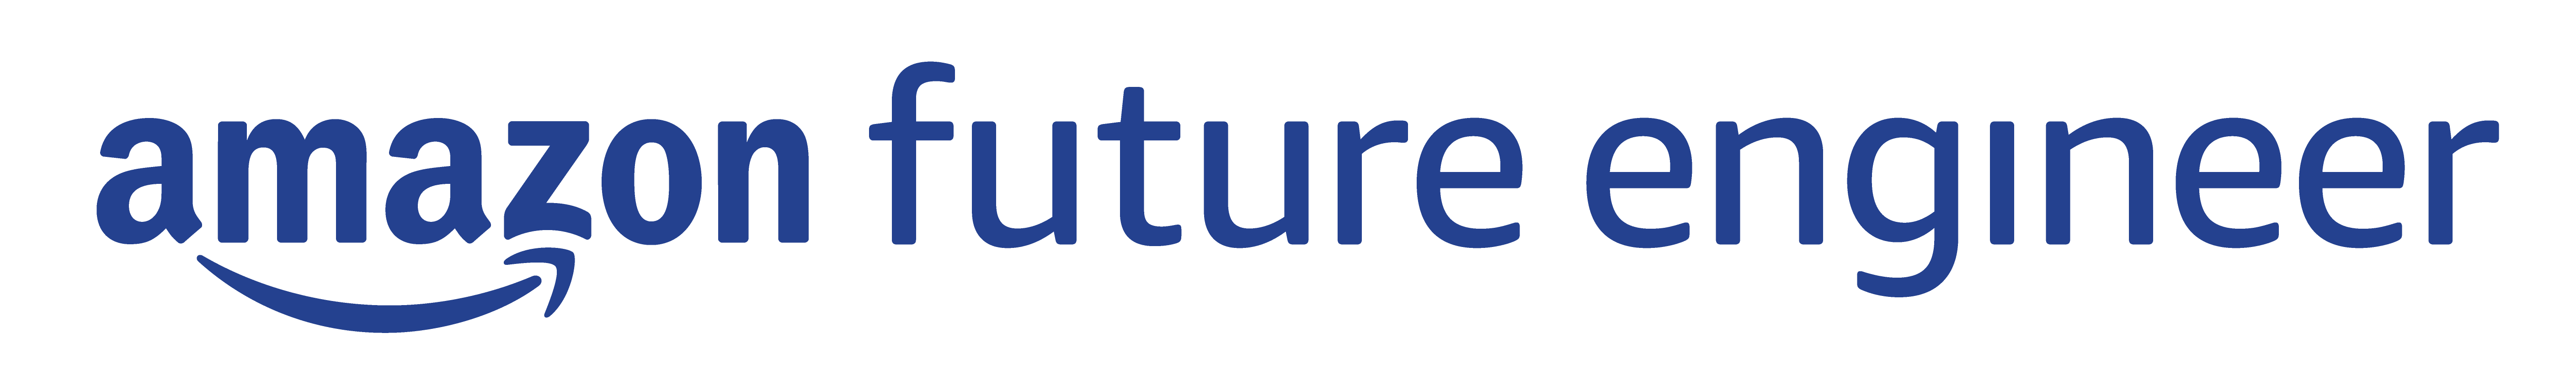 Amazon Future Engineer Logo